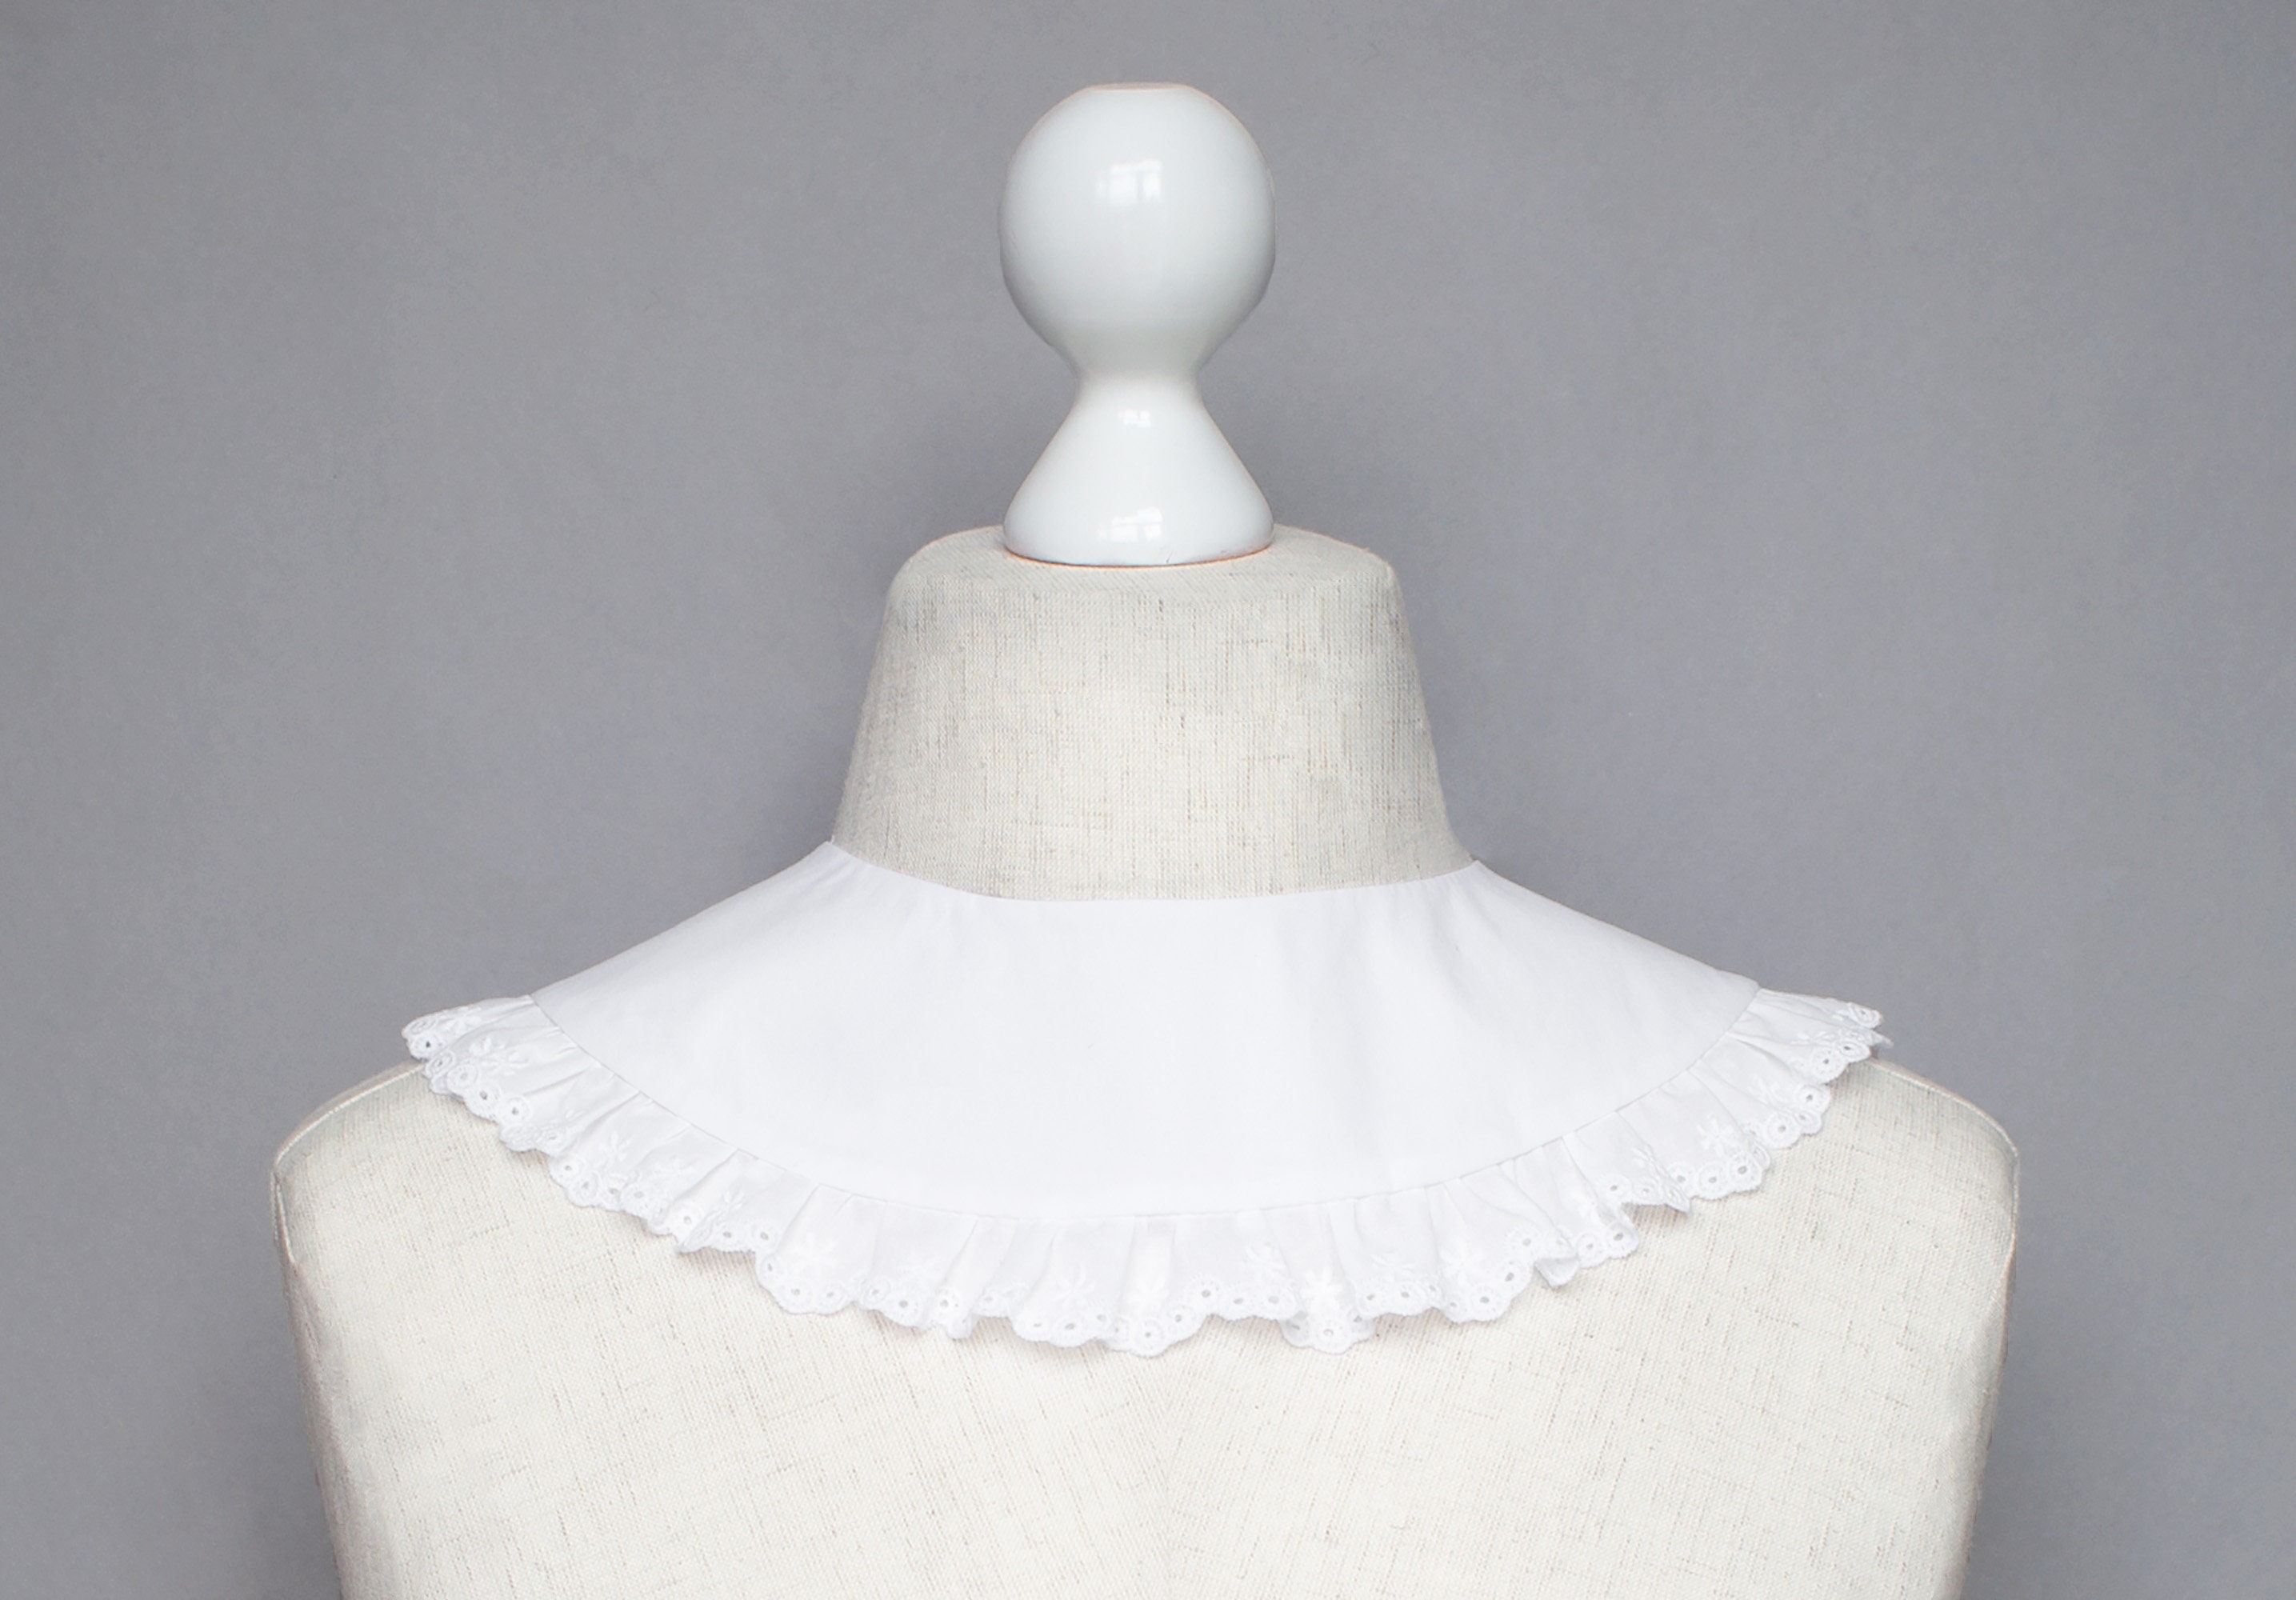 Neck ruffle collar Detachable Removable shirt collar White | Etsy